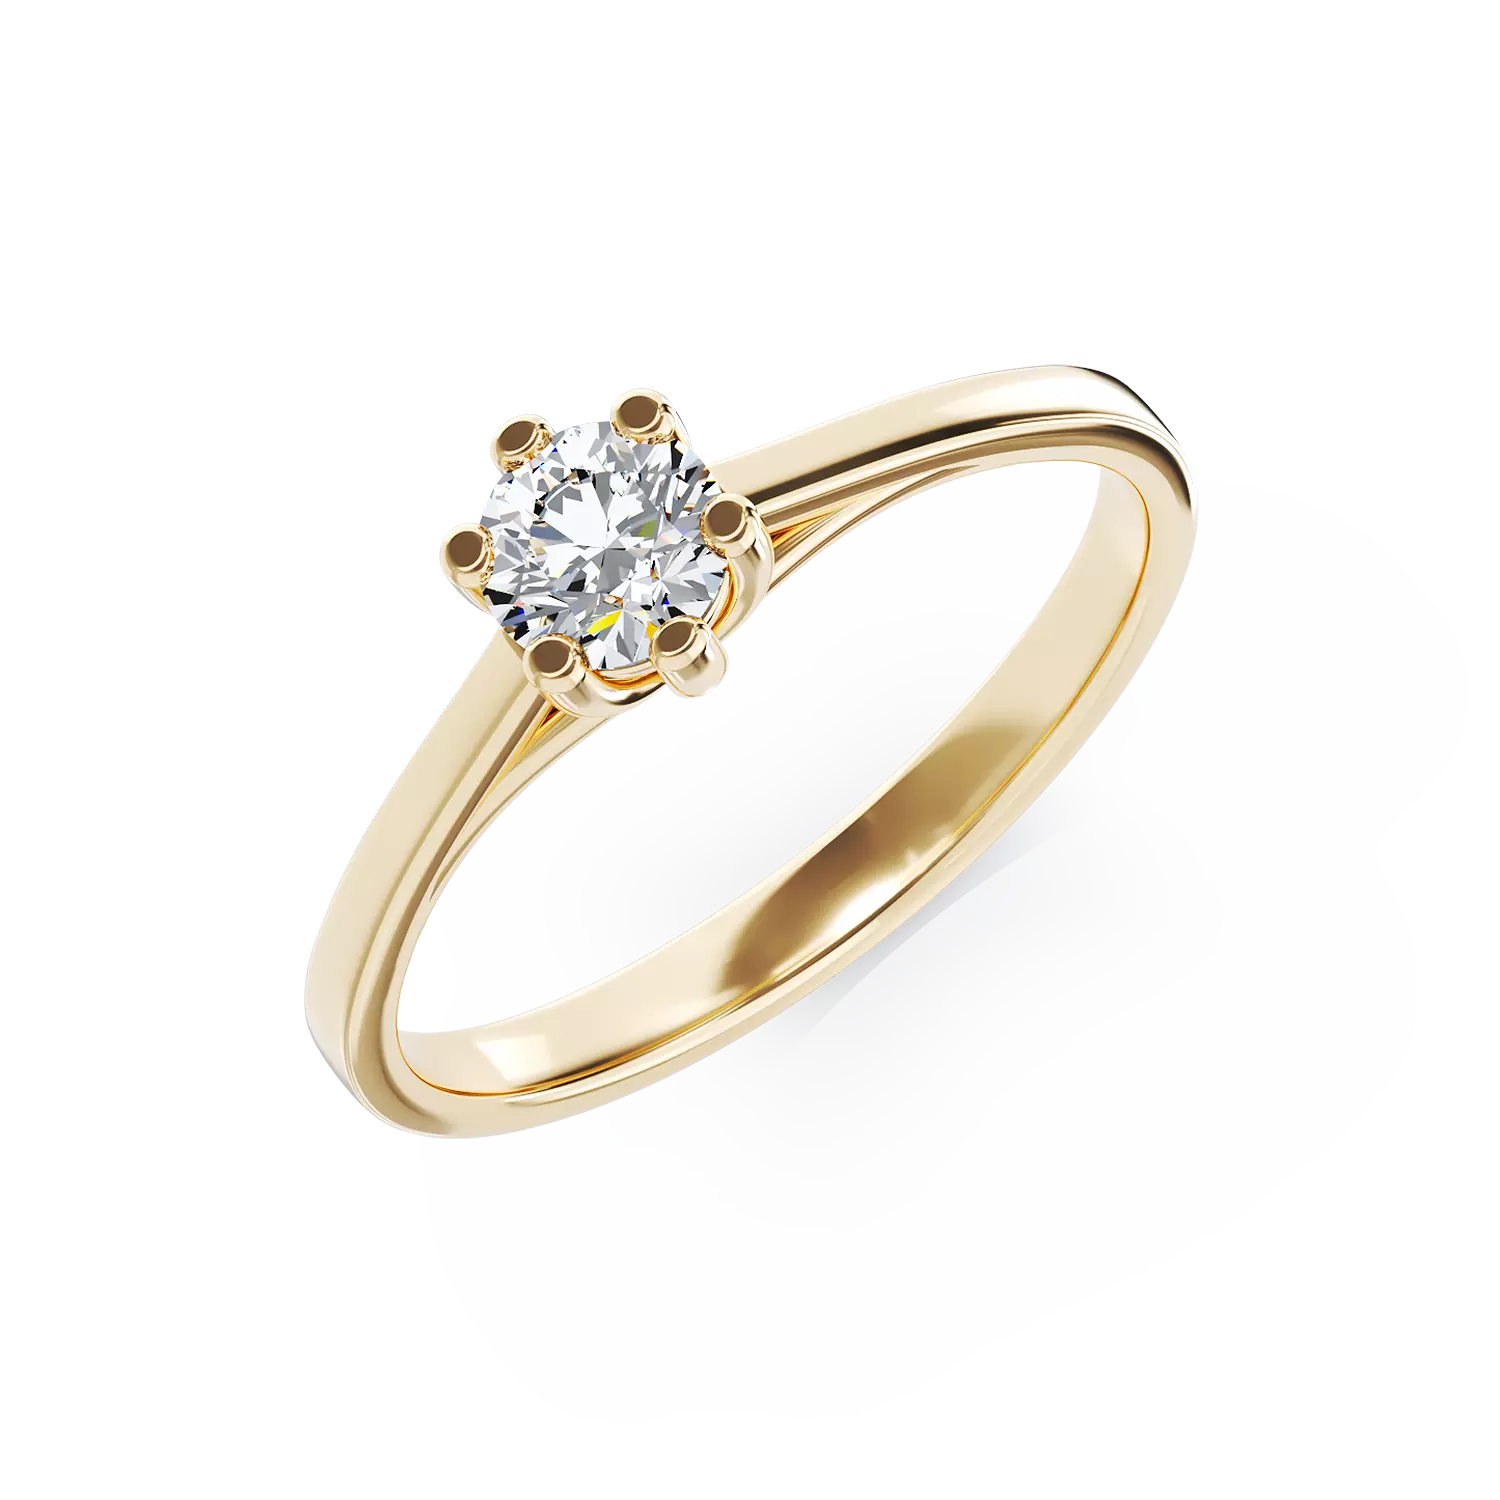 Inel de logodna din aur galben de 18K cu un diamant solitaire de 0.35ct